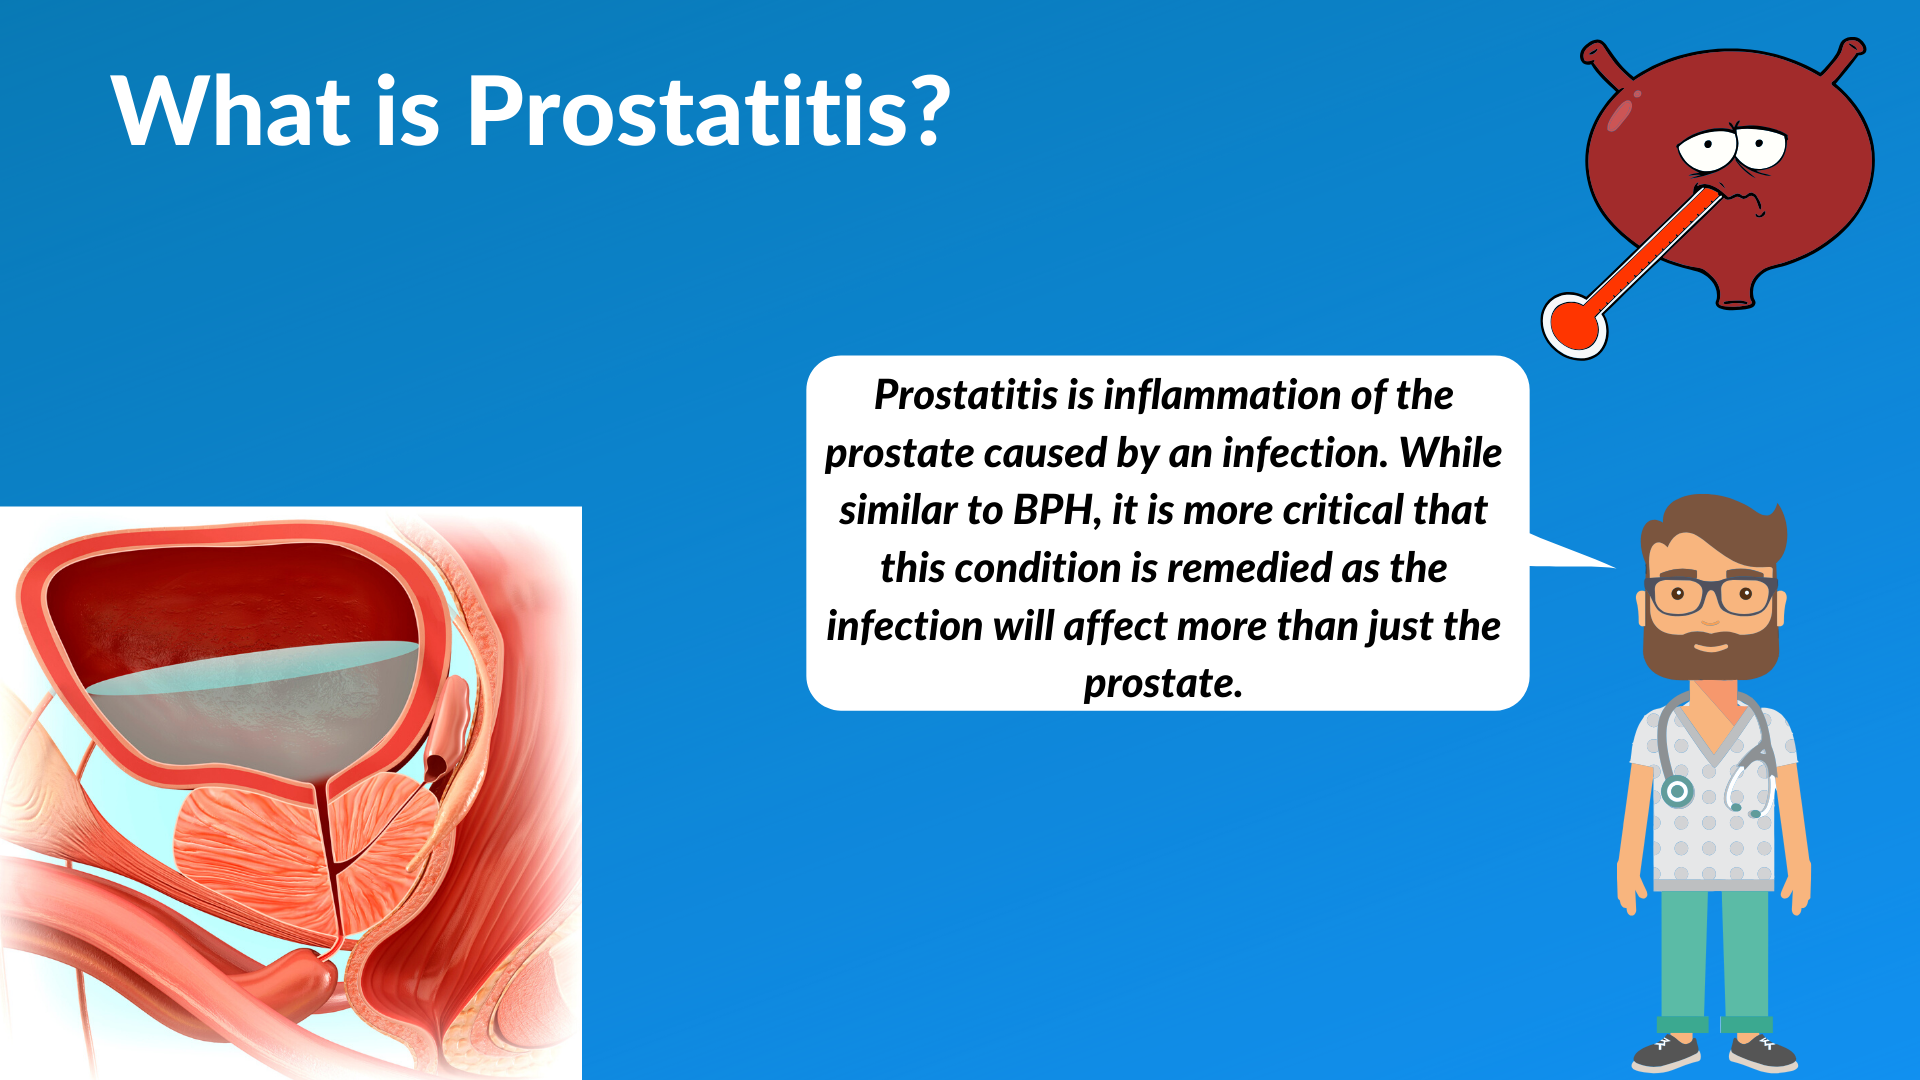 Vidio Mi a prosztatitis normal size of prostate in grams